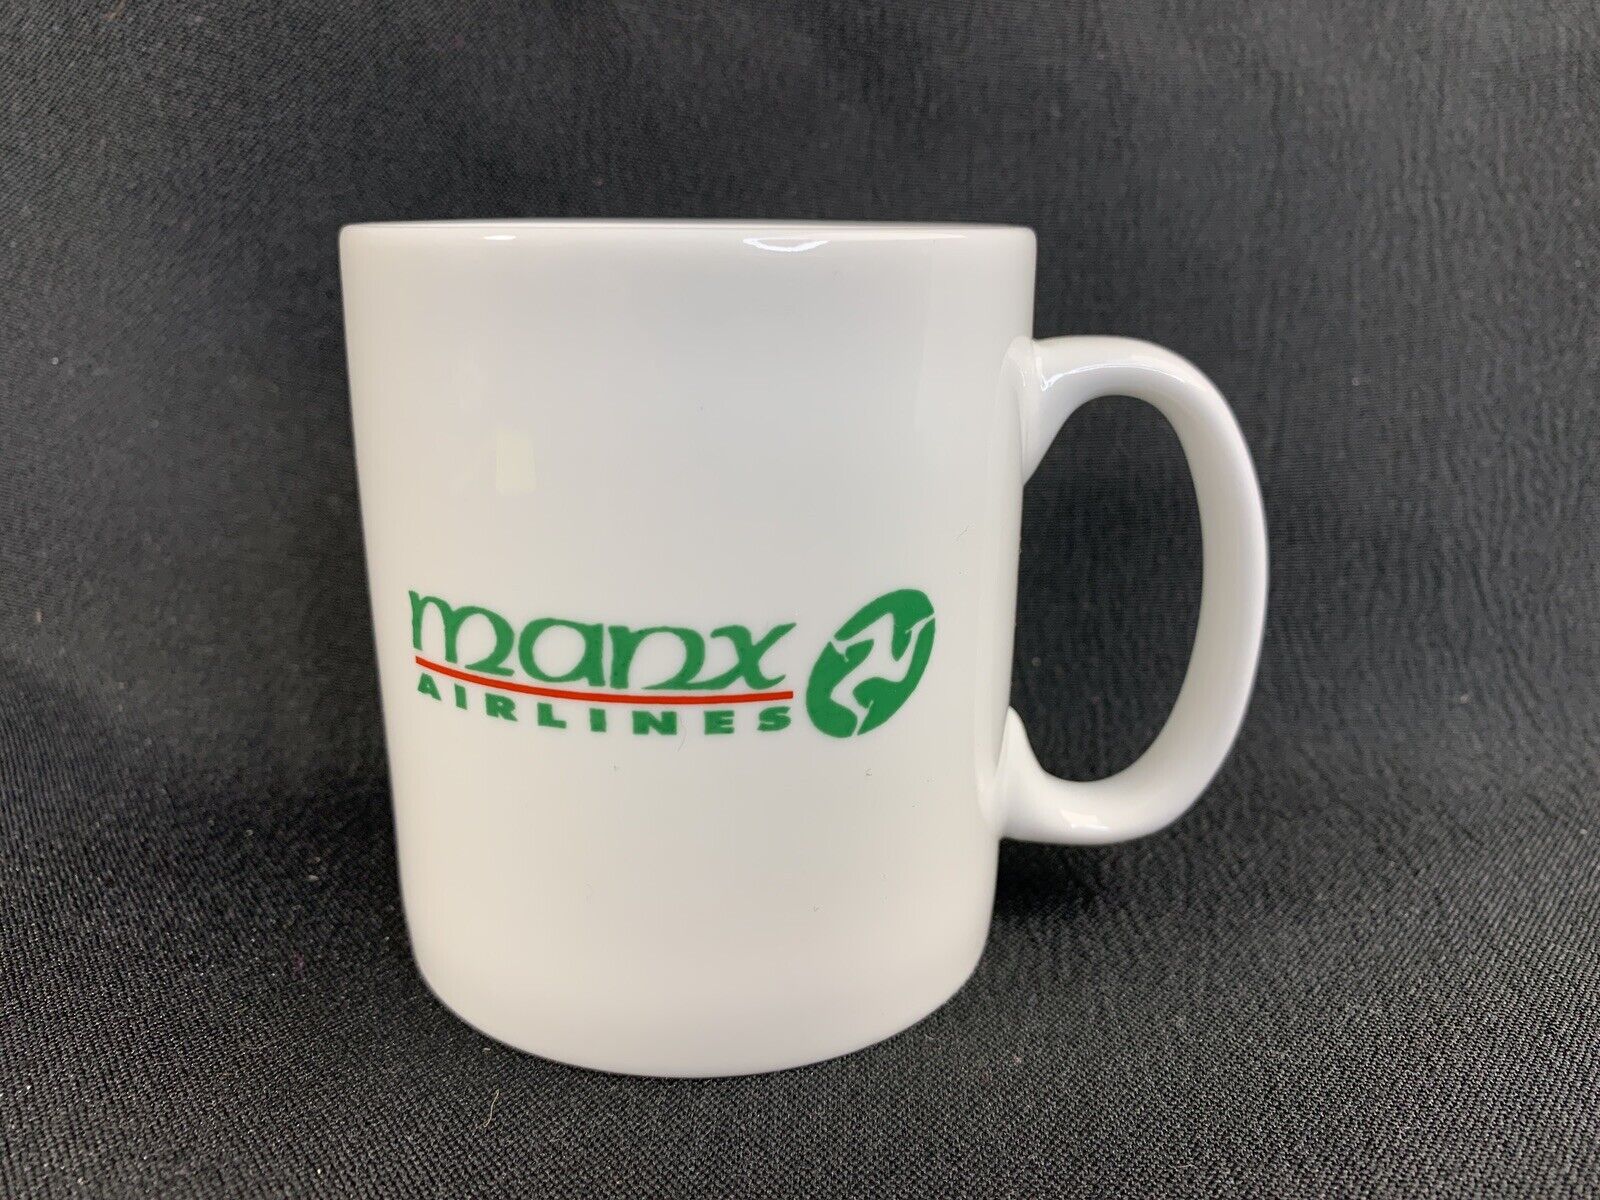 VIntage Isle of Man Manx Airlines Logo Coffee Cup or Mug Green Logo on White Mug